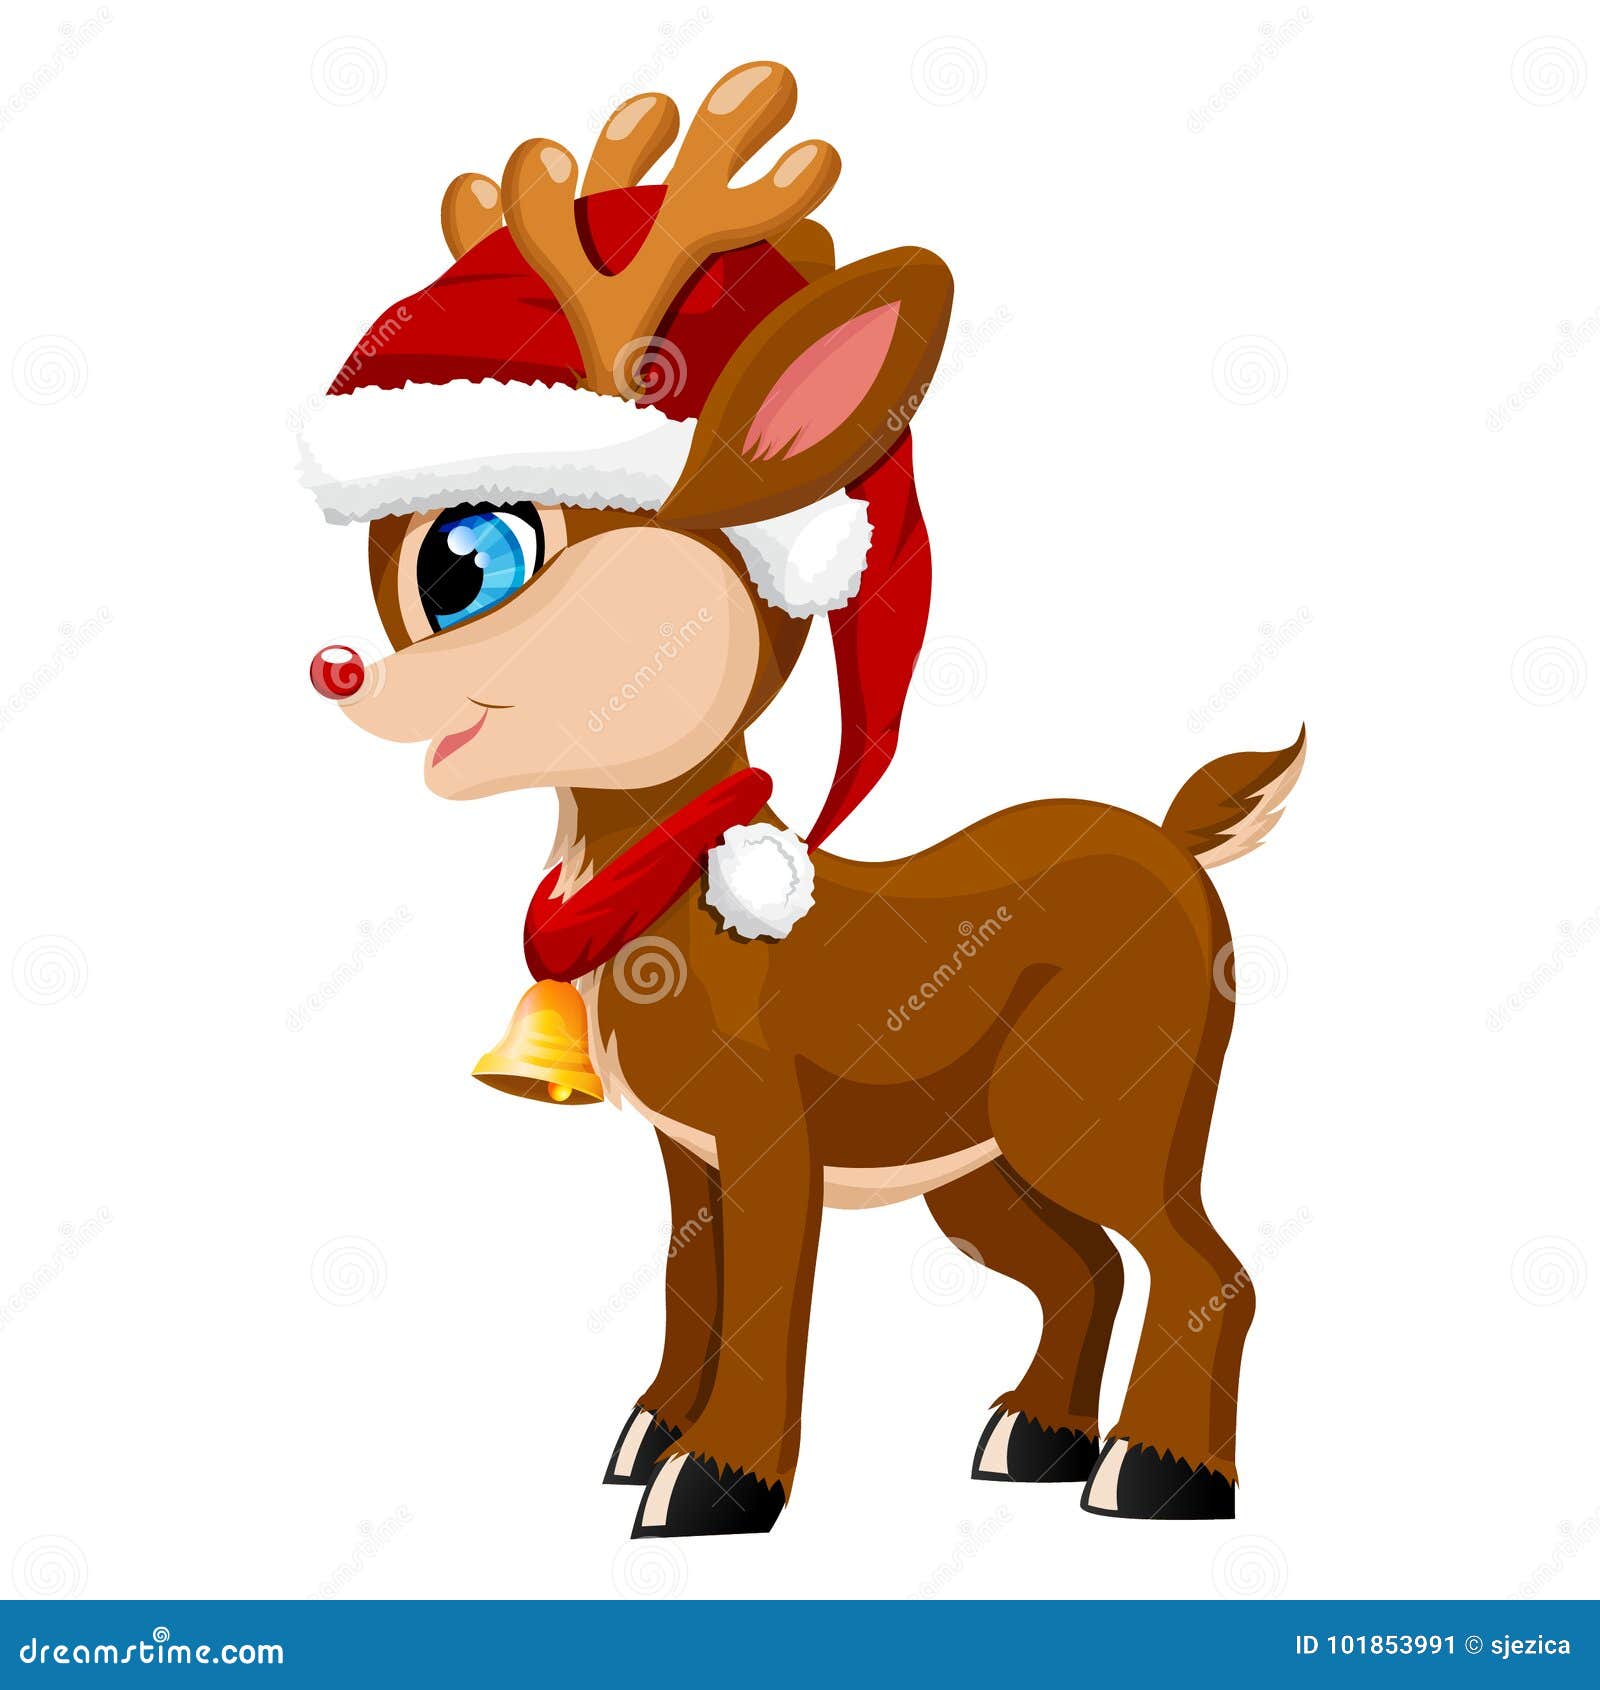 adorable reindeer in santa's hat